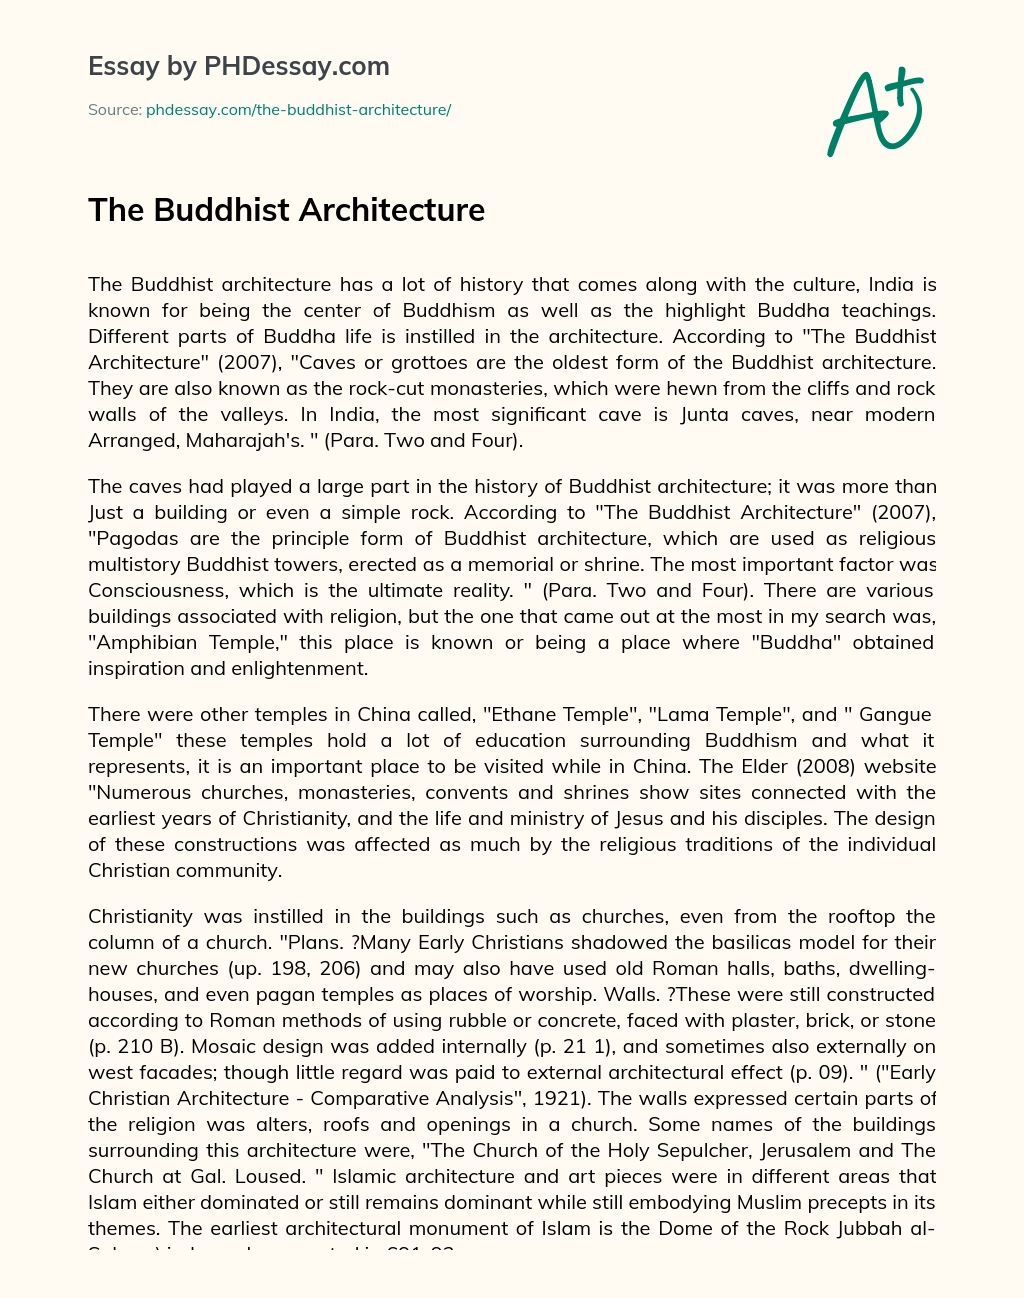 The Buddhist Architecture essay